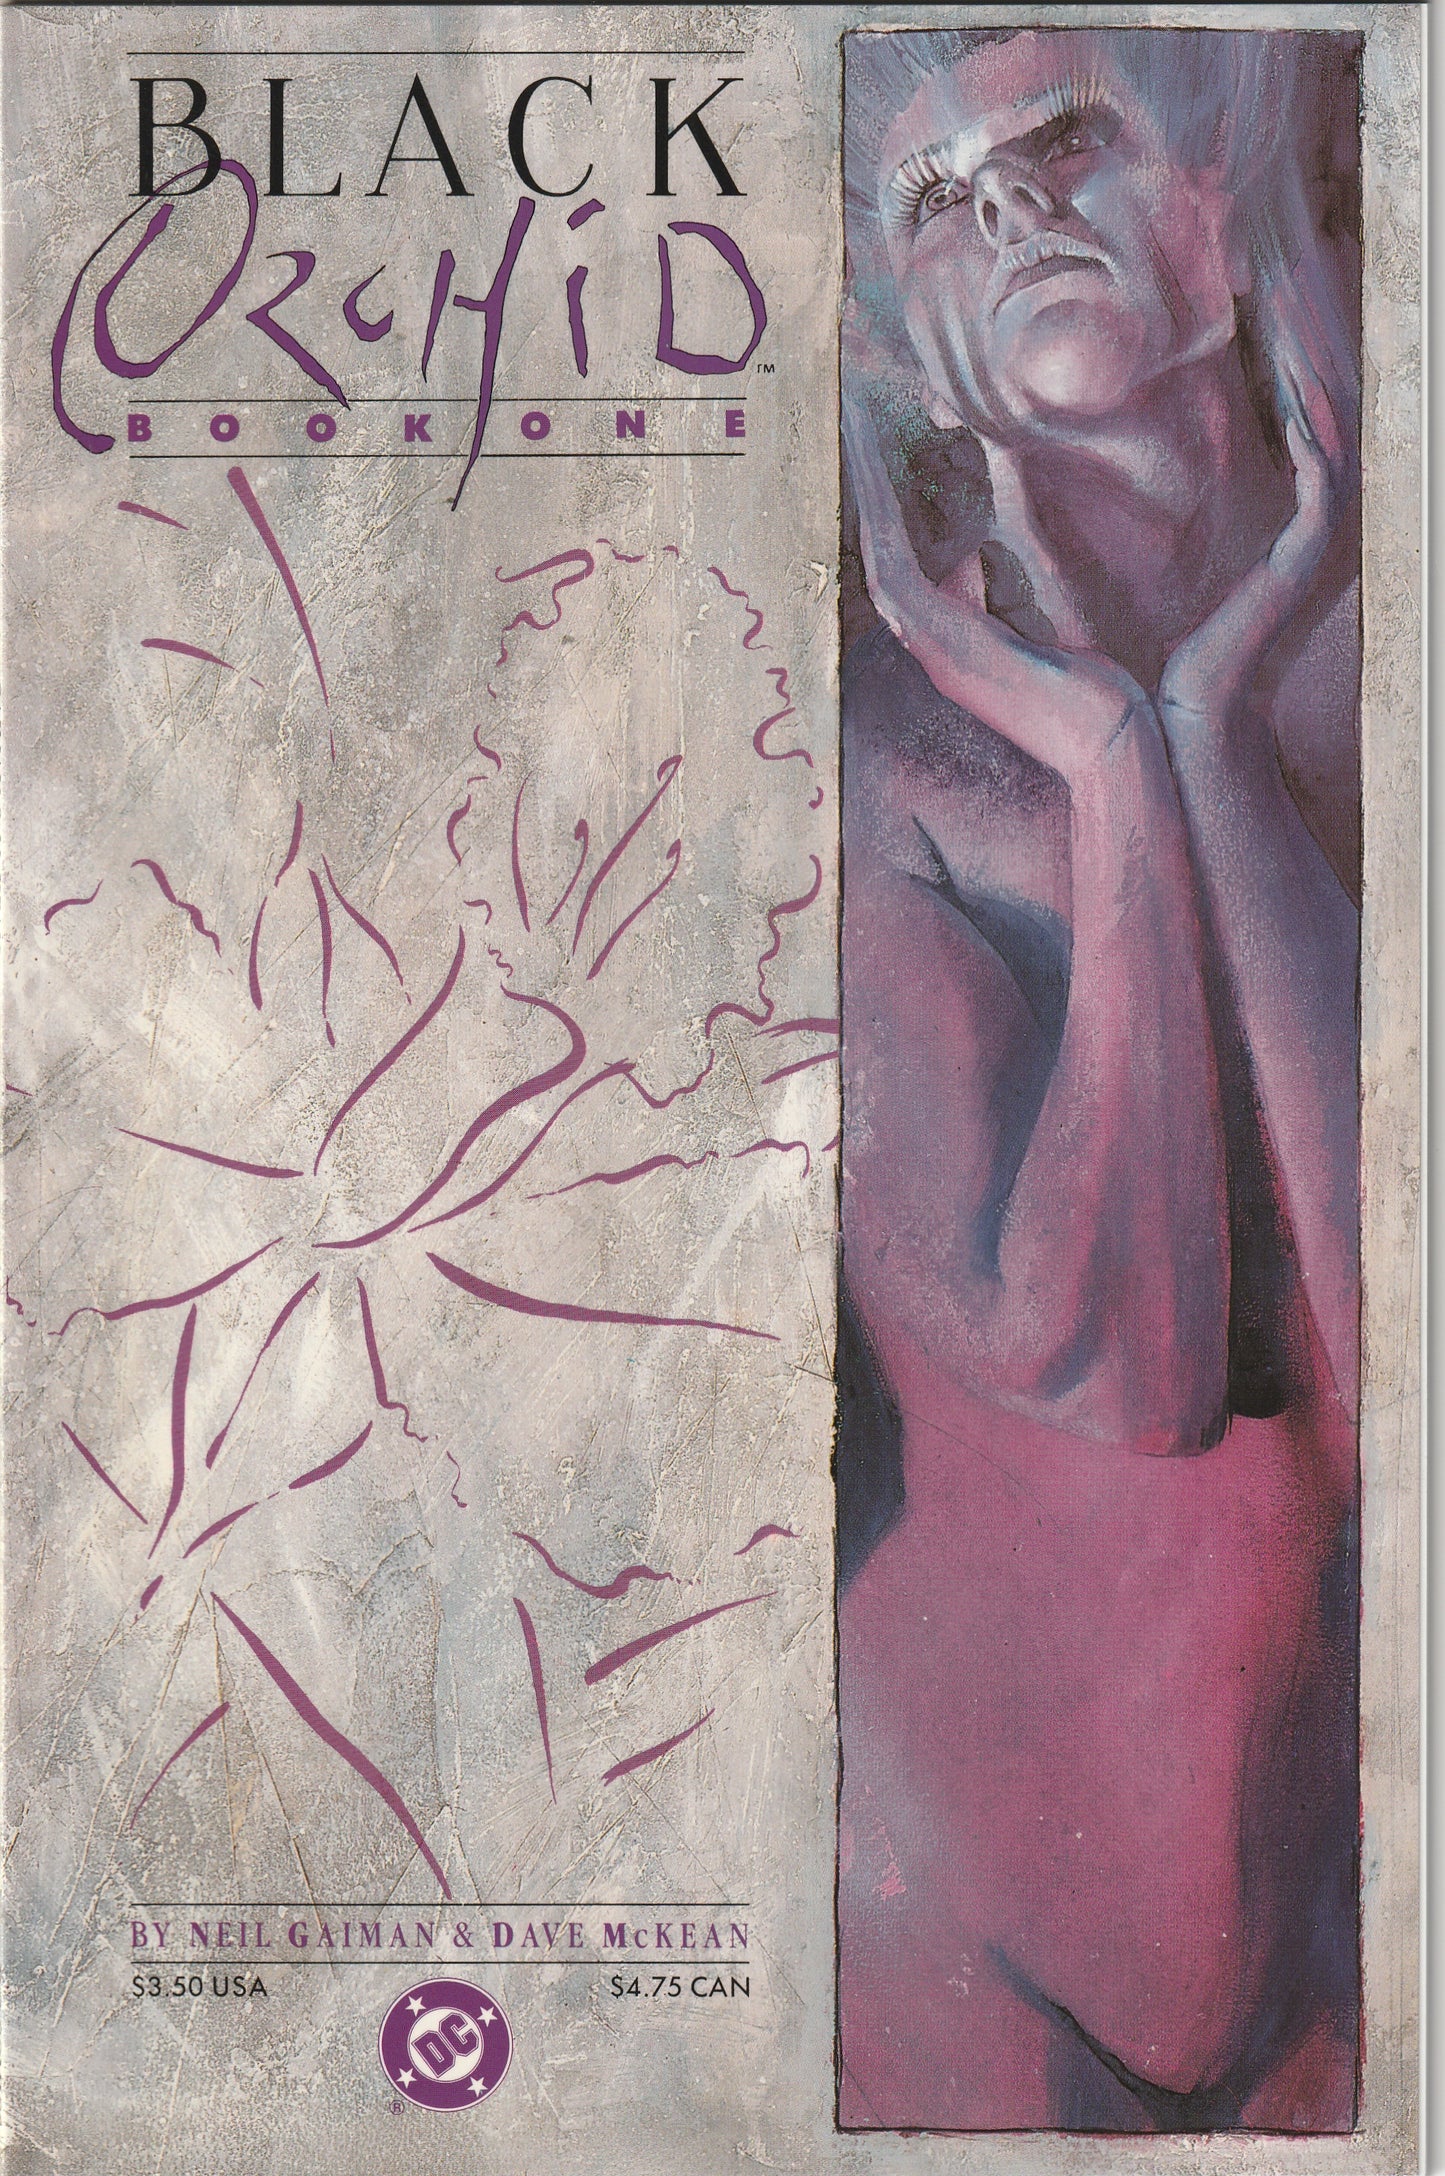 Black Orchid (1988-89) - Complete 3 issue mini-series - 1st Neil Gaiman work!